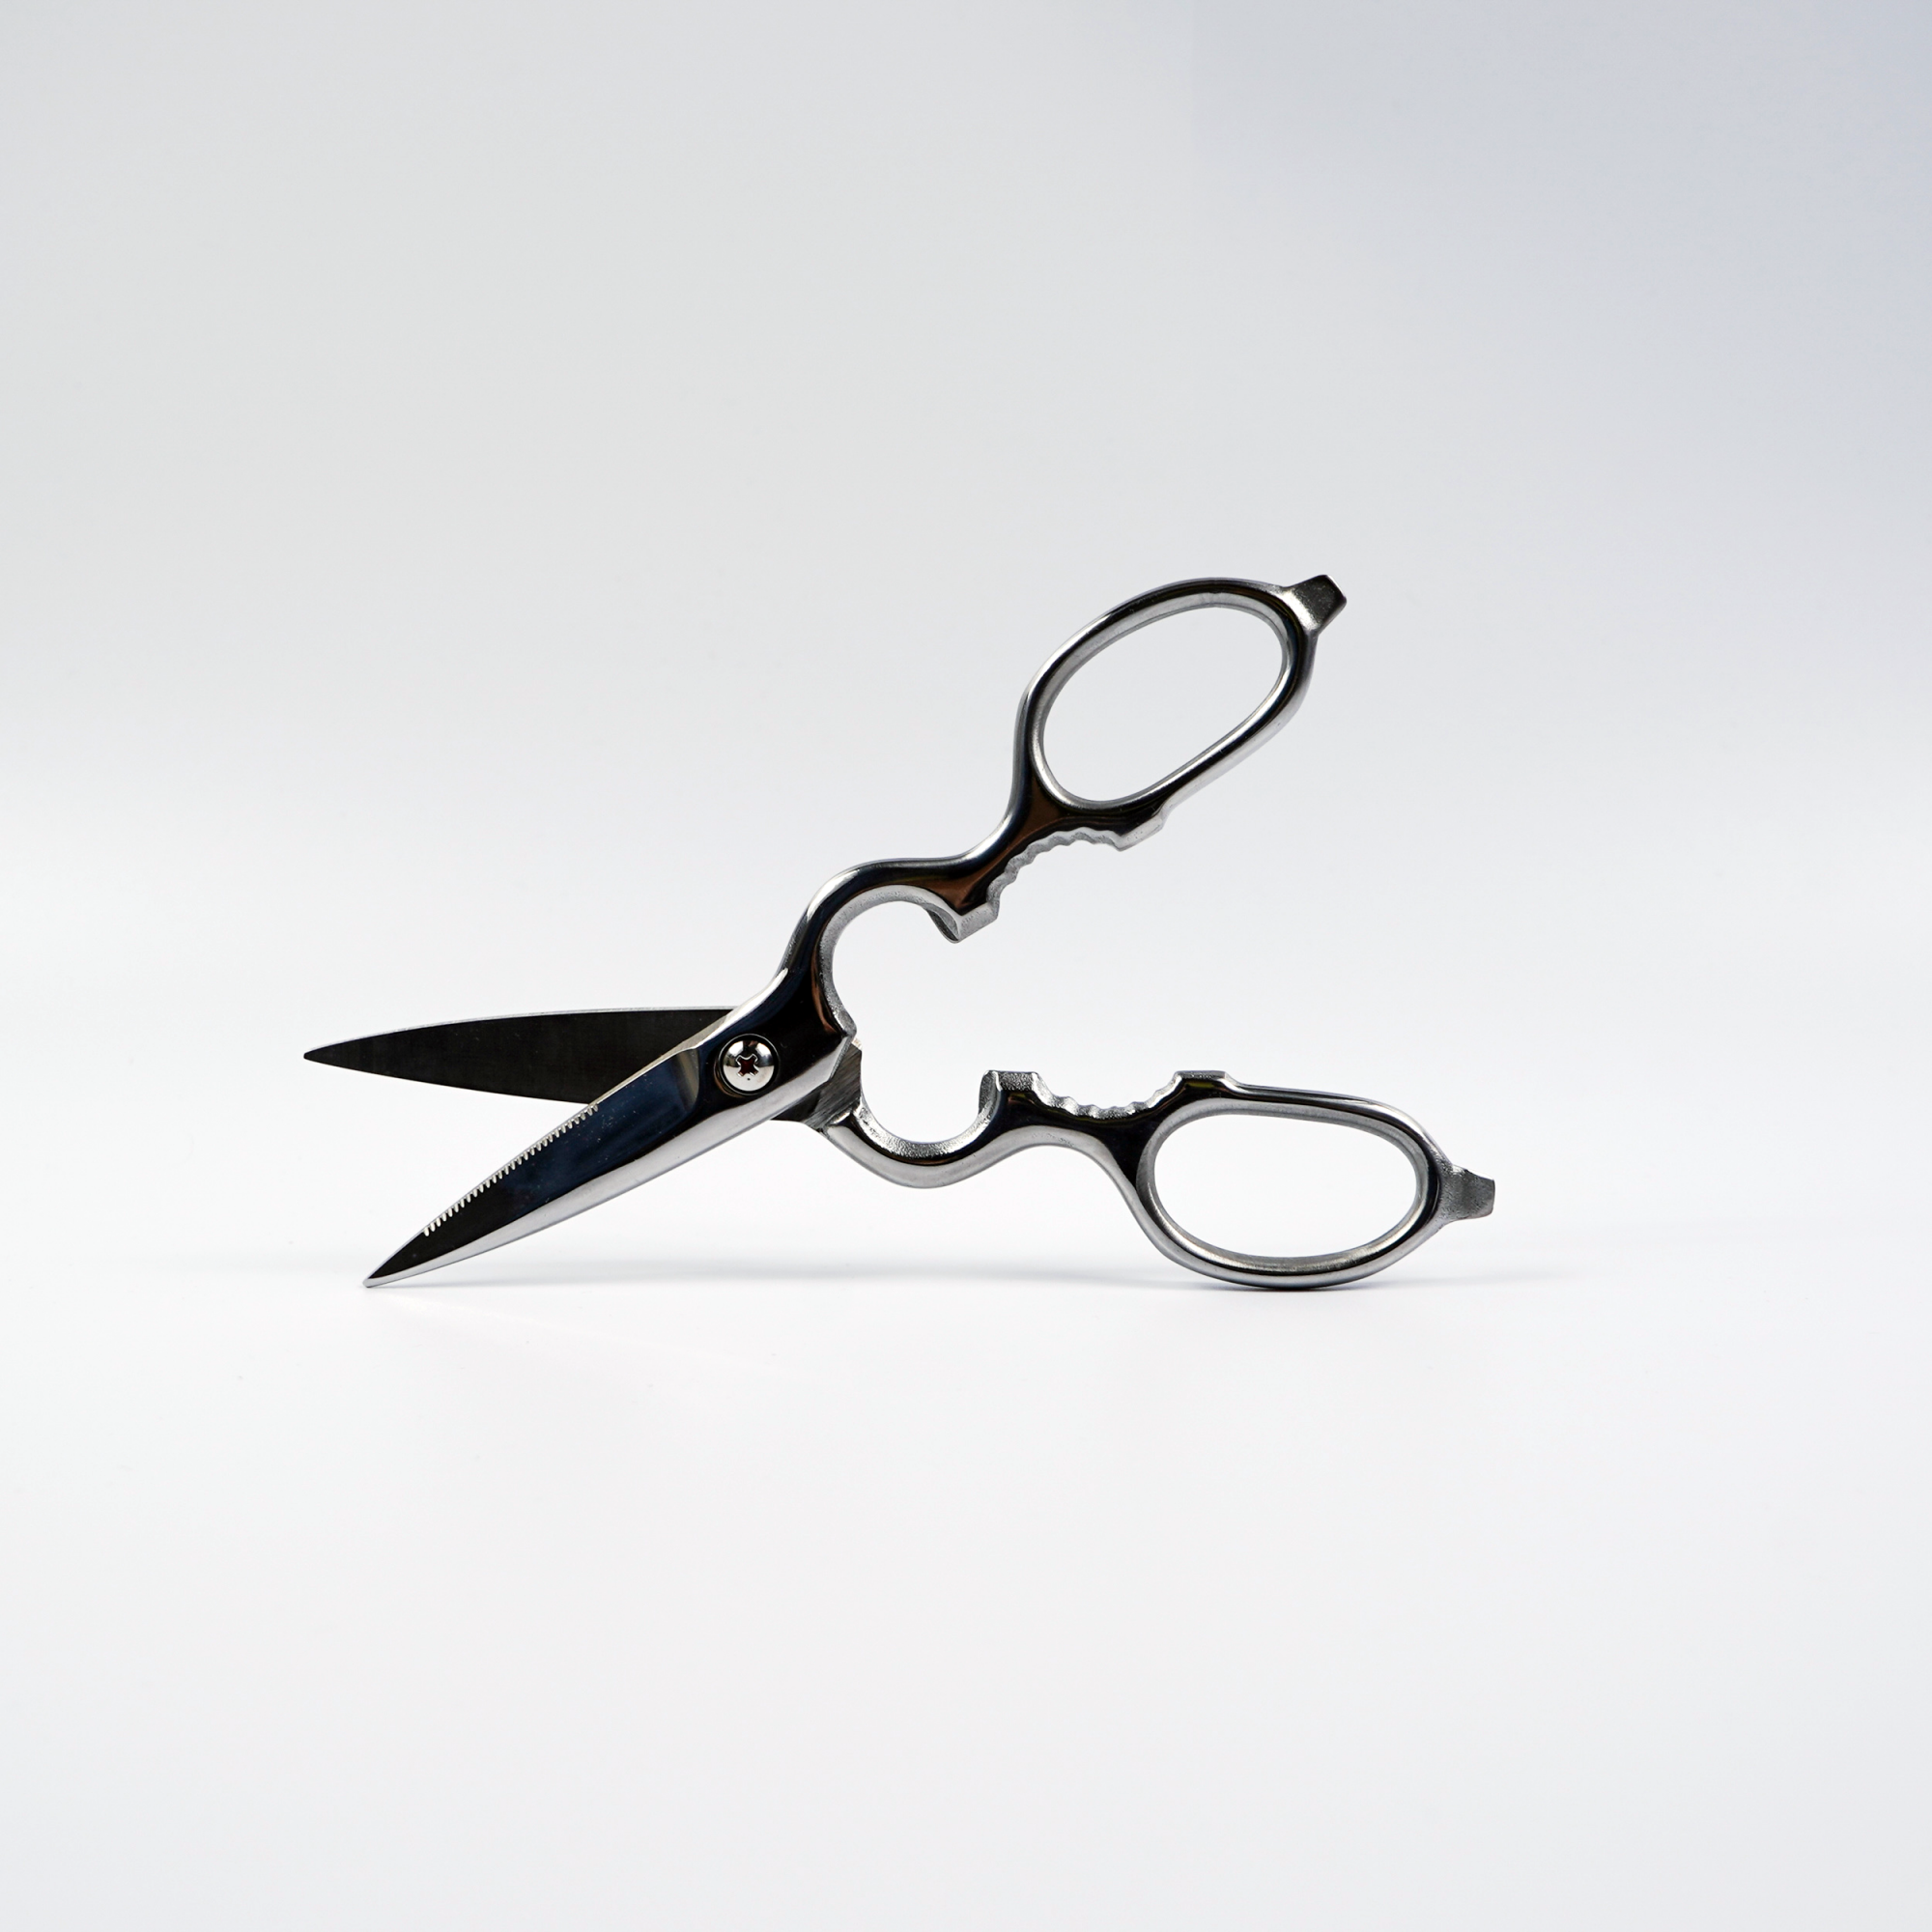 japanese kitchen scissors scissors django japana sharp